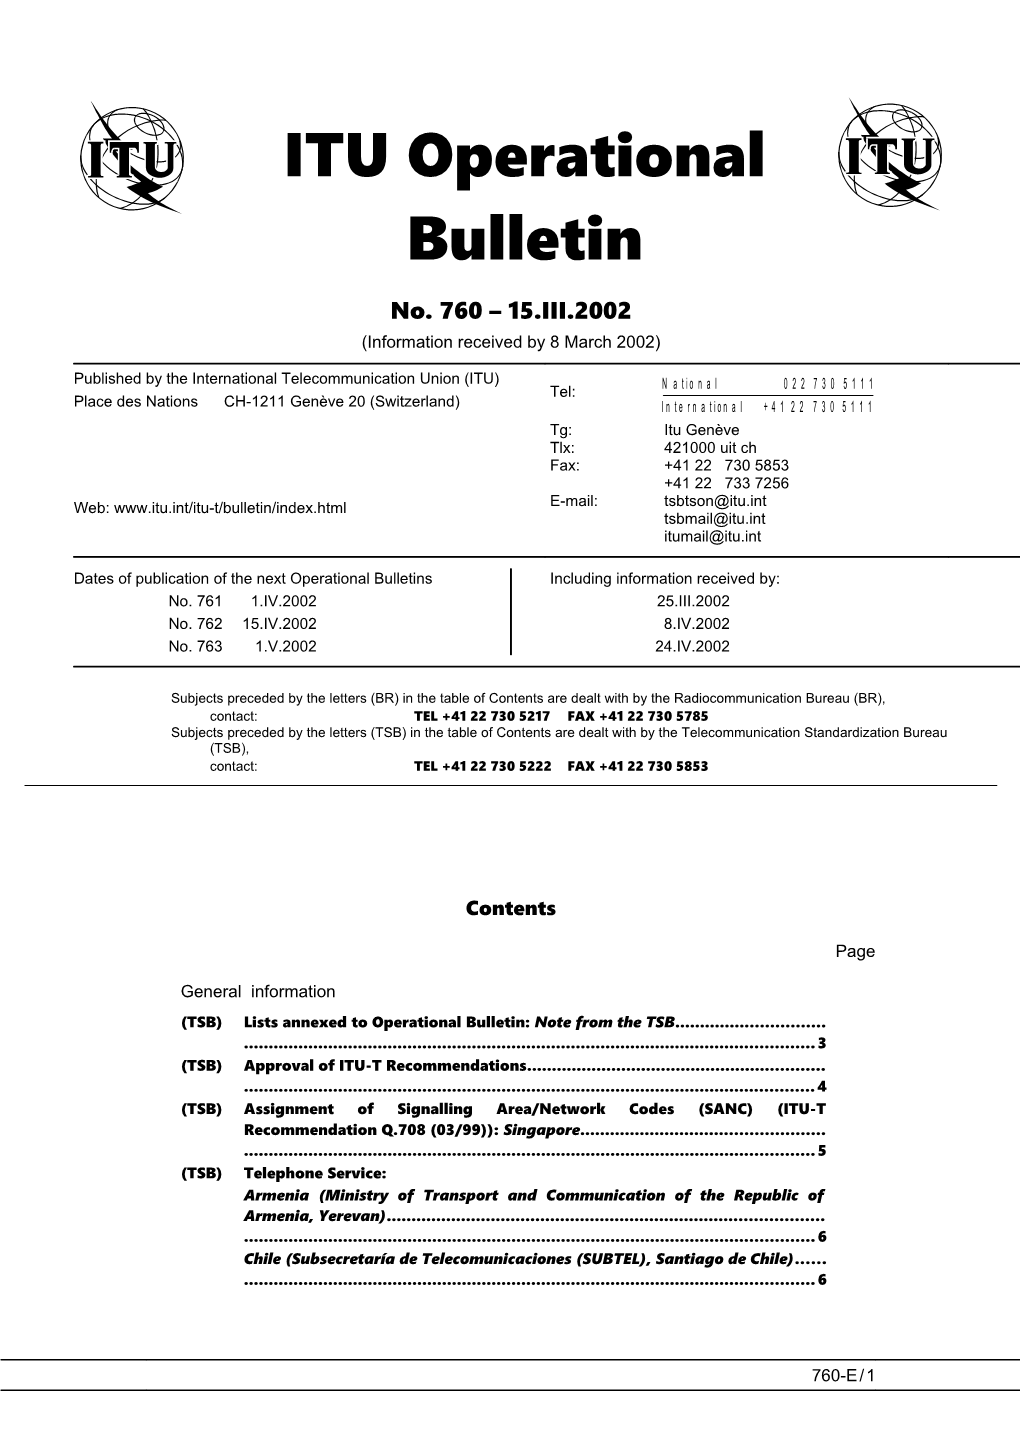 ITU Operational Bulletin 760 - 15.III.2002